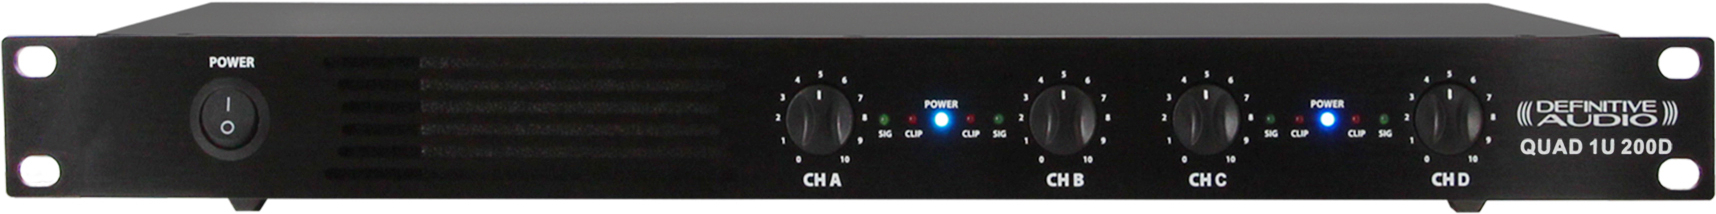 Definitive Audio Quad 1u 200d - Multi-kanalen krachtversterker - Main picture